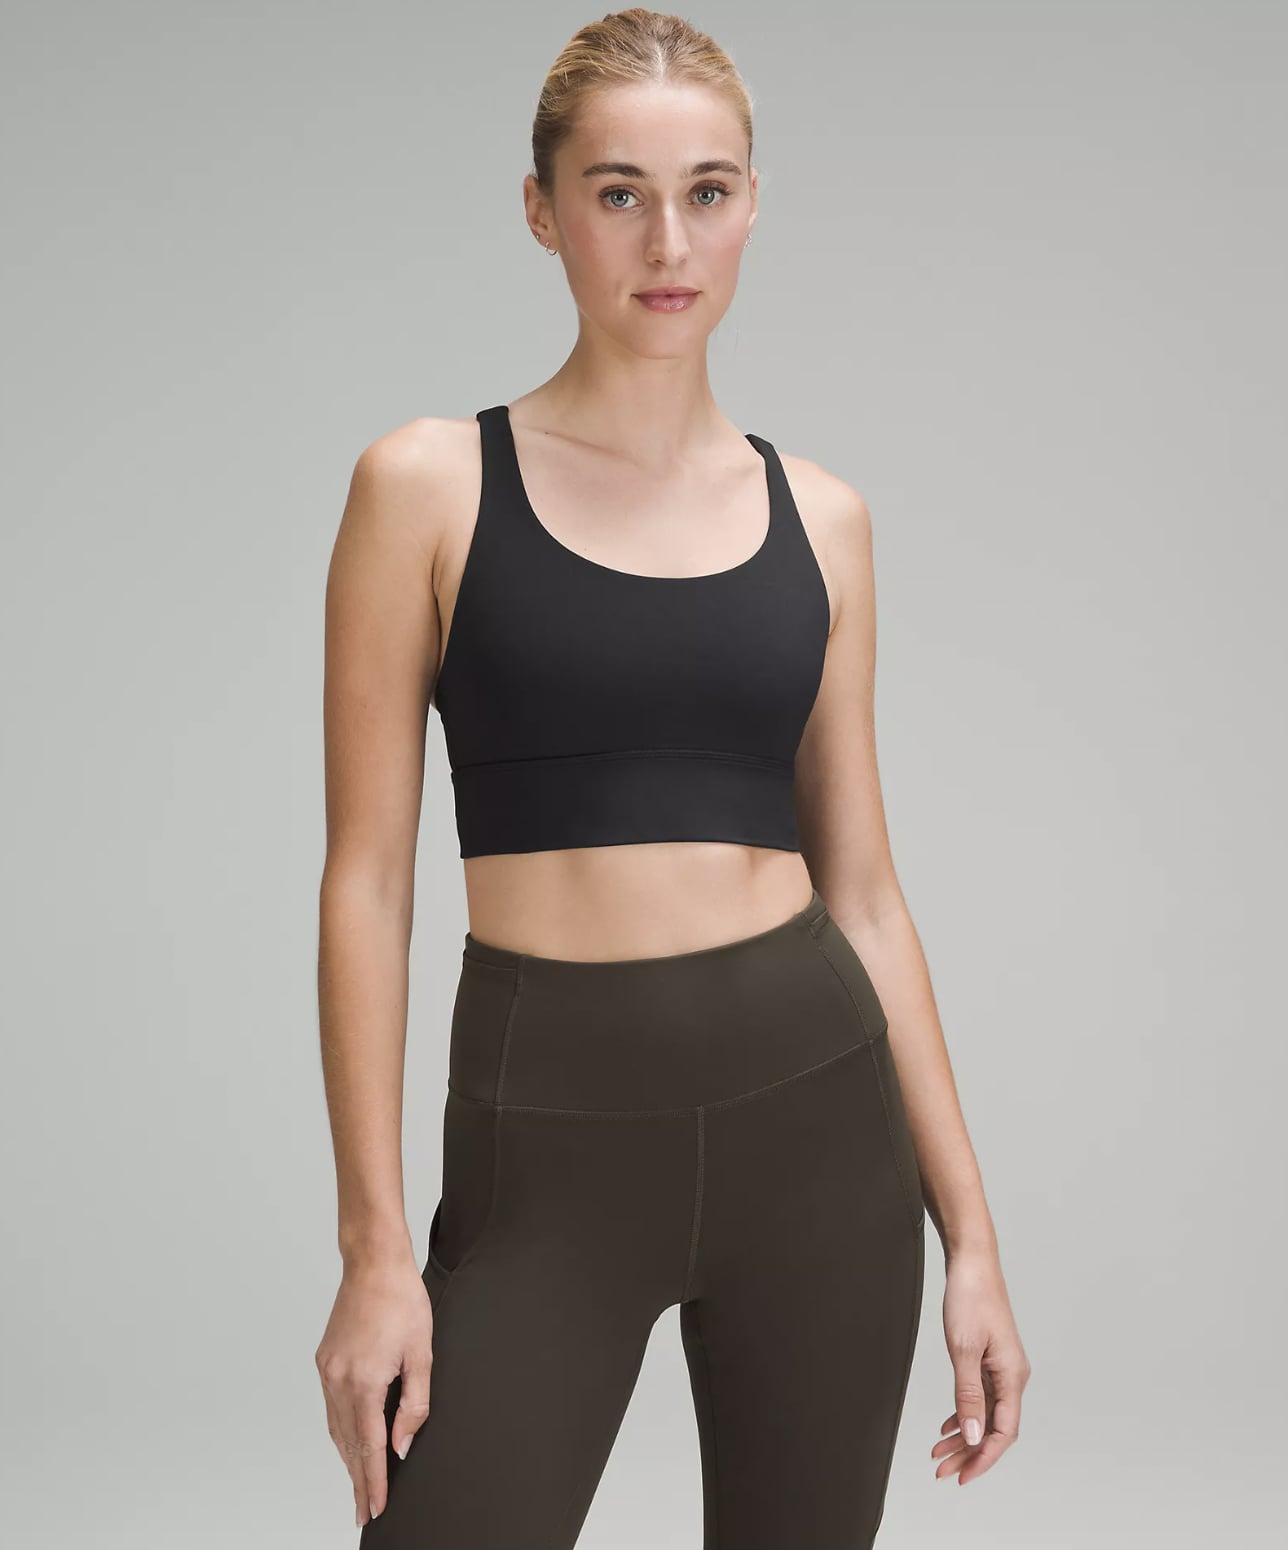 Lulu-6 Tank Women Yoga Bra Shirts Sports Vest Fitness Tops Sexy